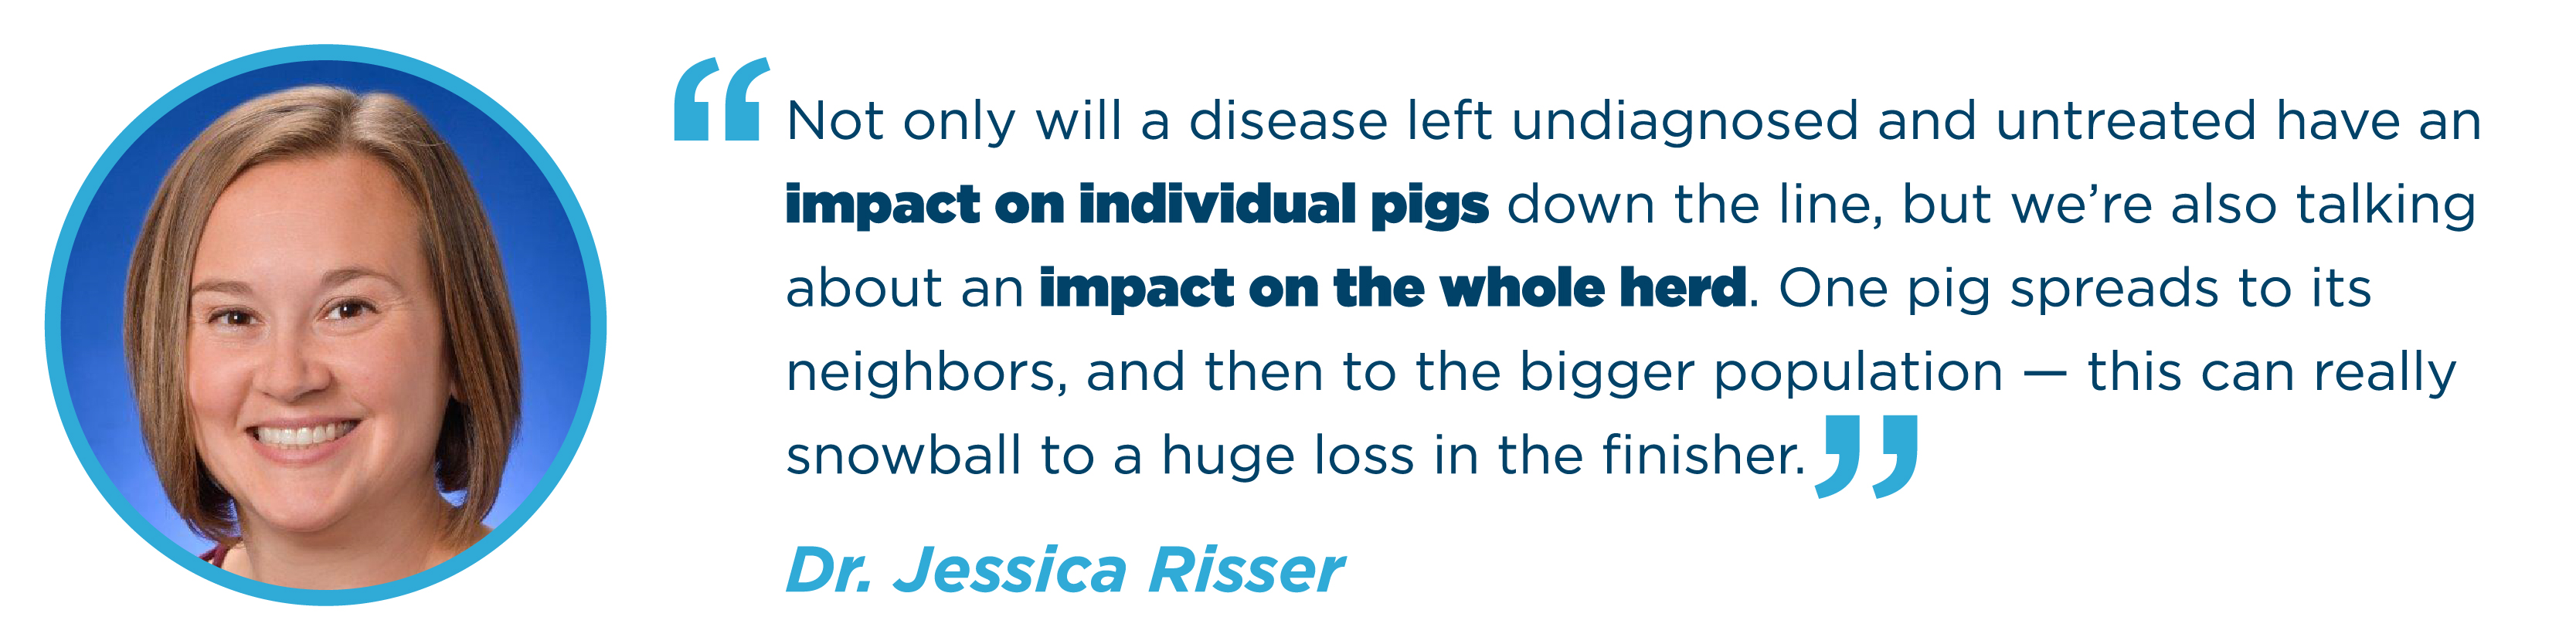 Dr. Jessica Risser quote